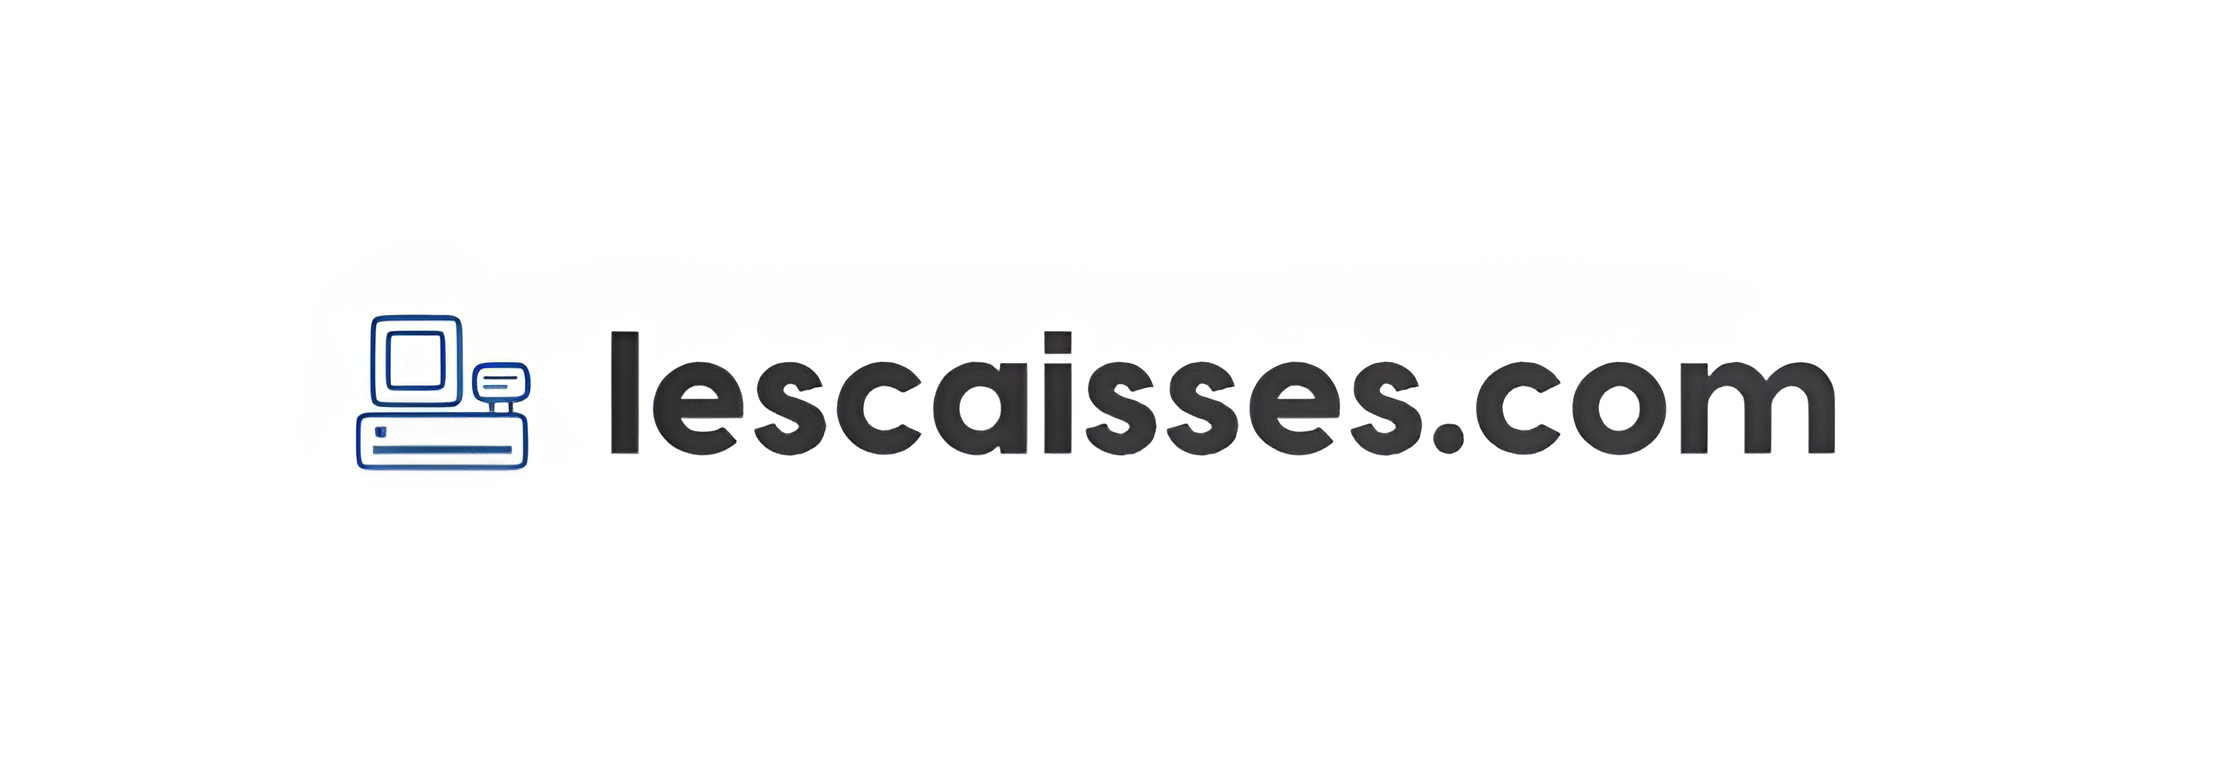 lescaisses.com